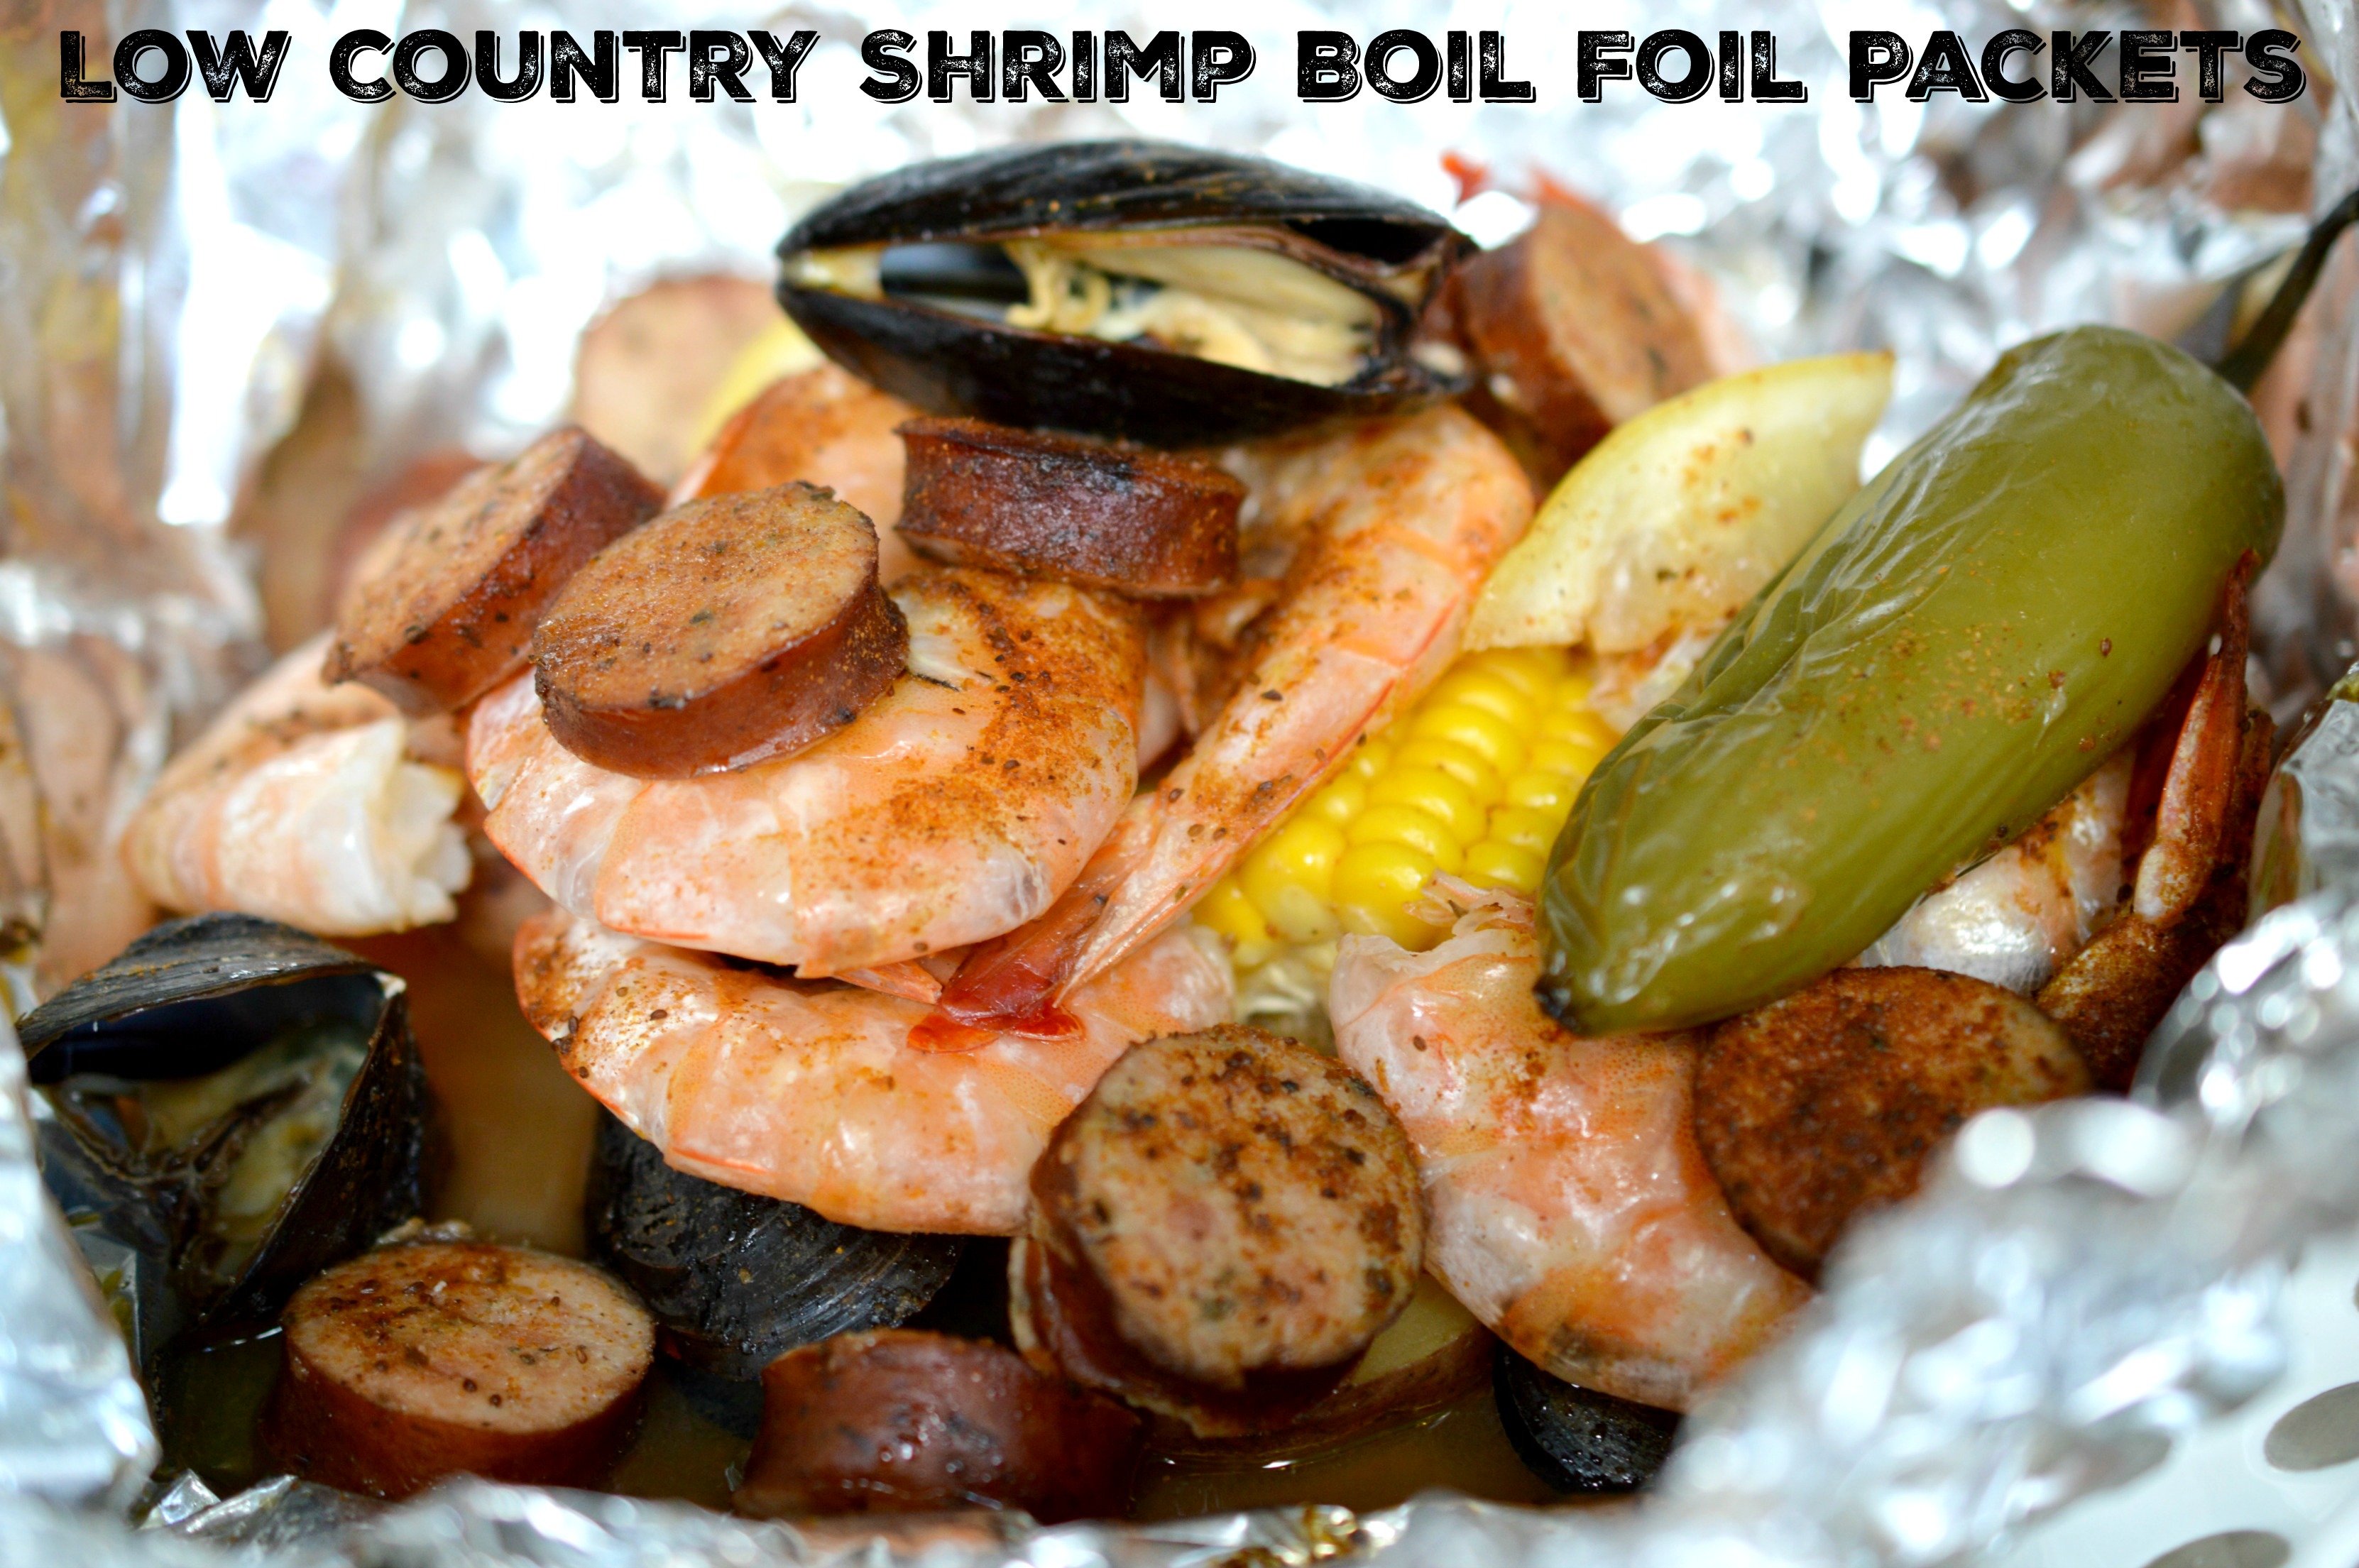 Low Country Shrimp Boil Foil Packets